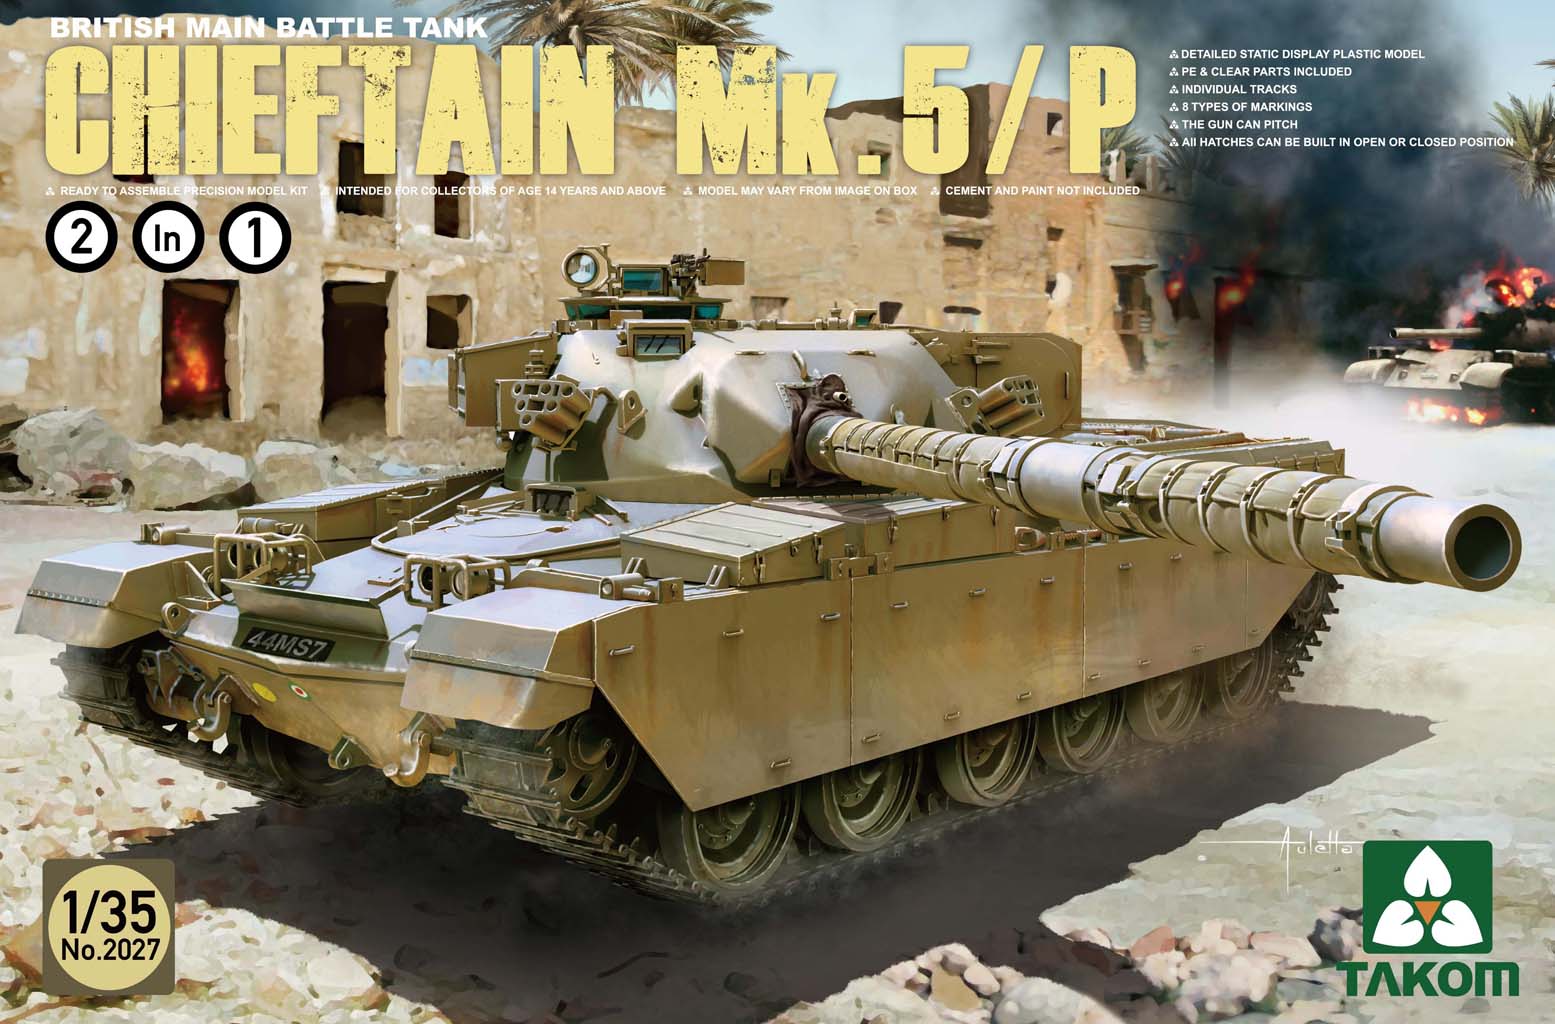 British Main Battle Tank Chieftain Mk.5/P (2 in 1)